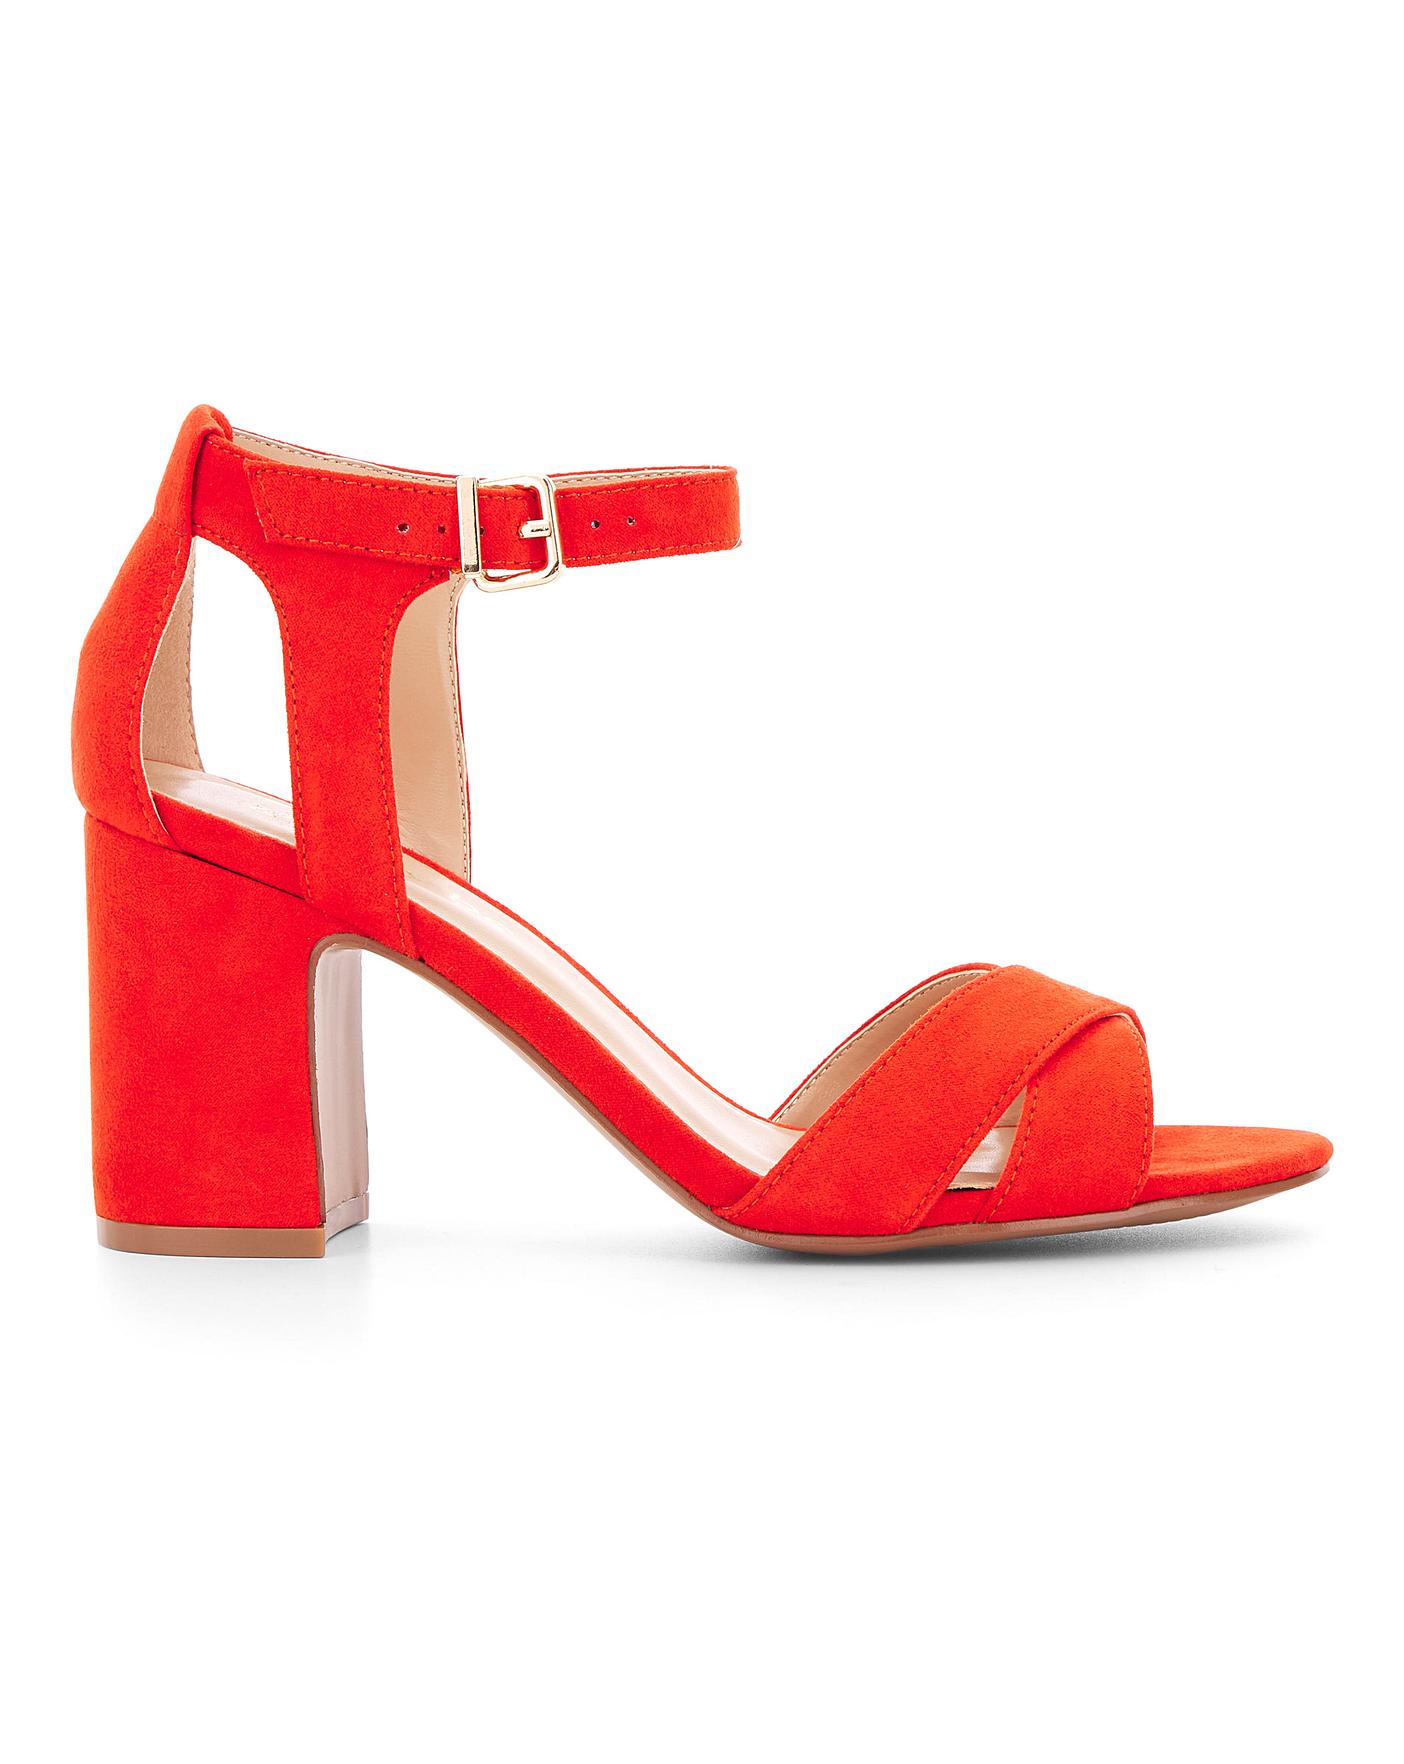 red block heels wide fit